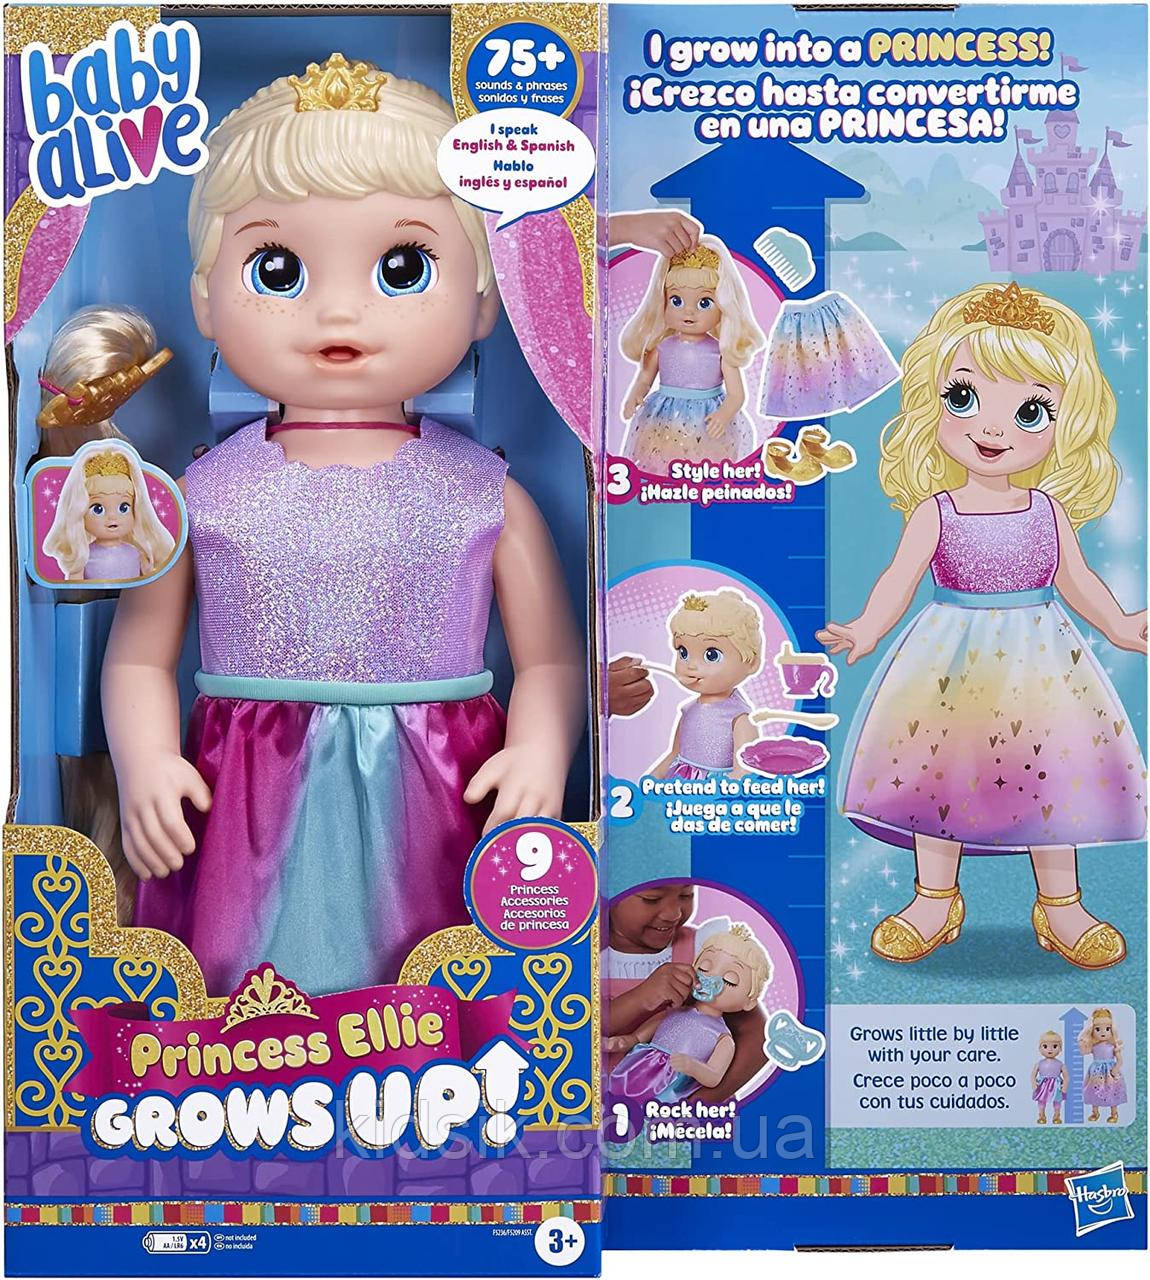 Інтерактивна лялька принцеса Еллі, що росте Бебі Елайф Хасбро — Baby Alive Princess Ellie Grows Up